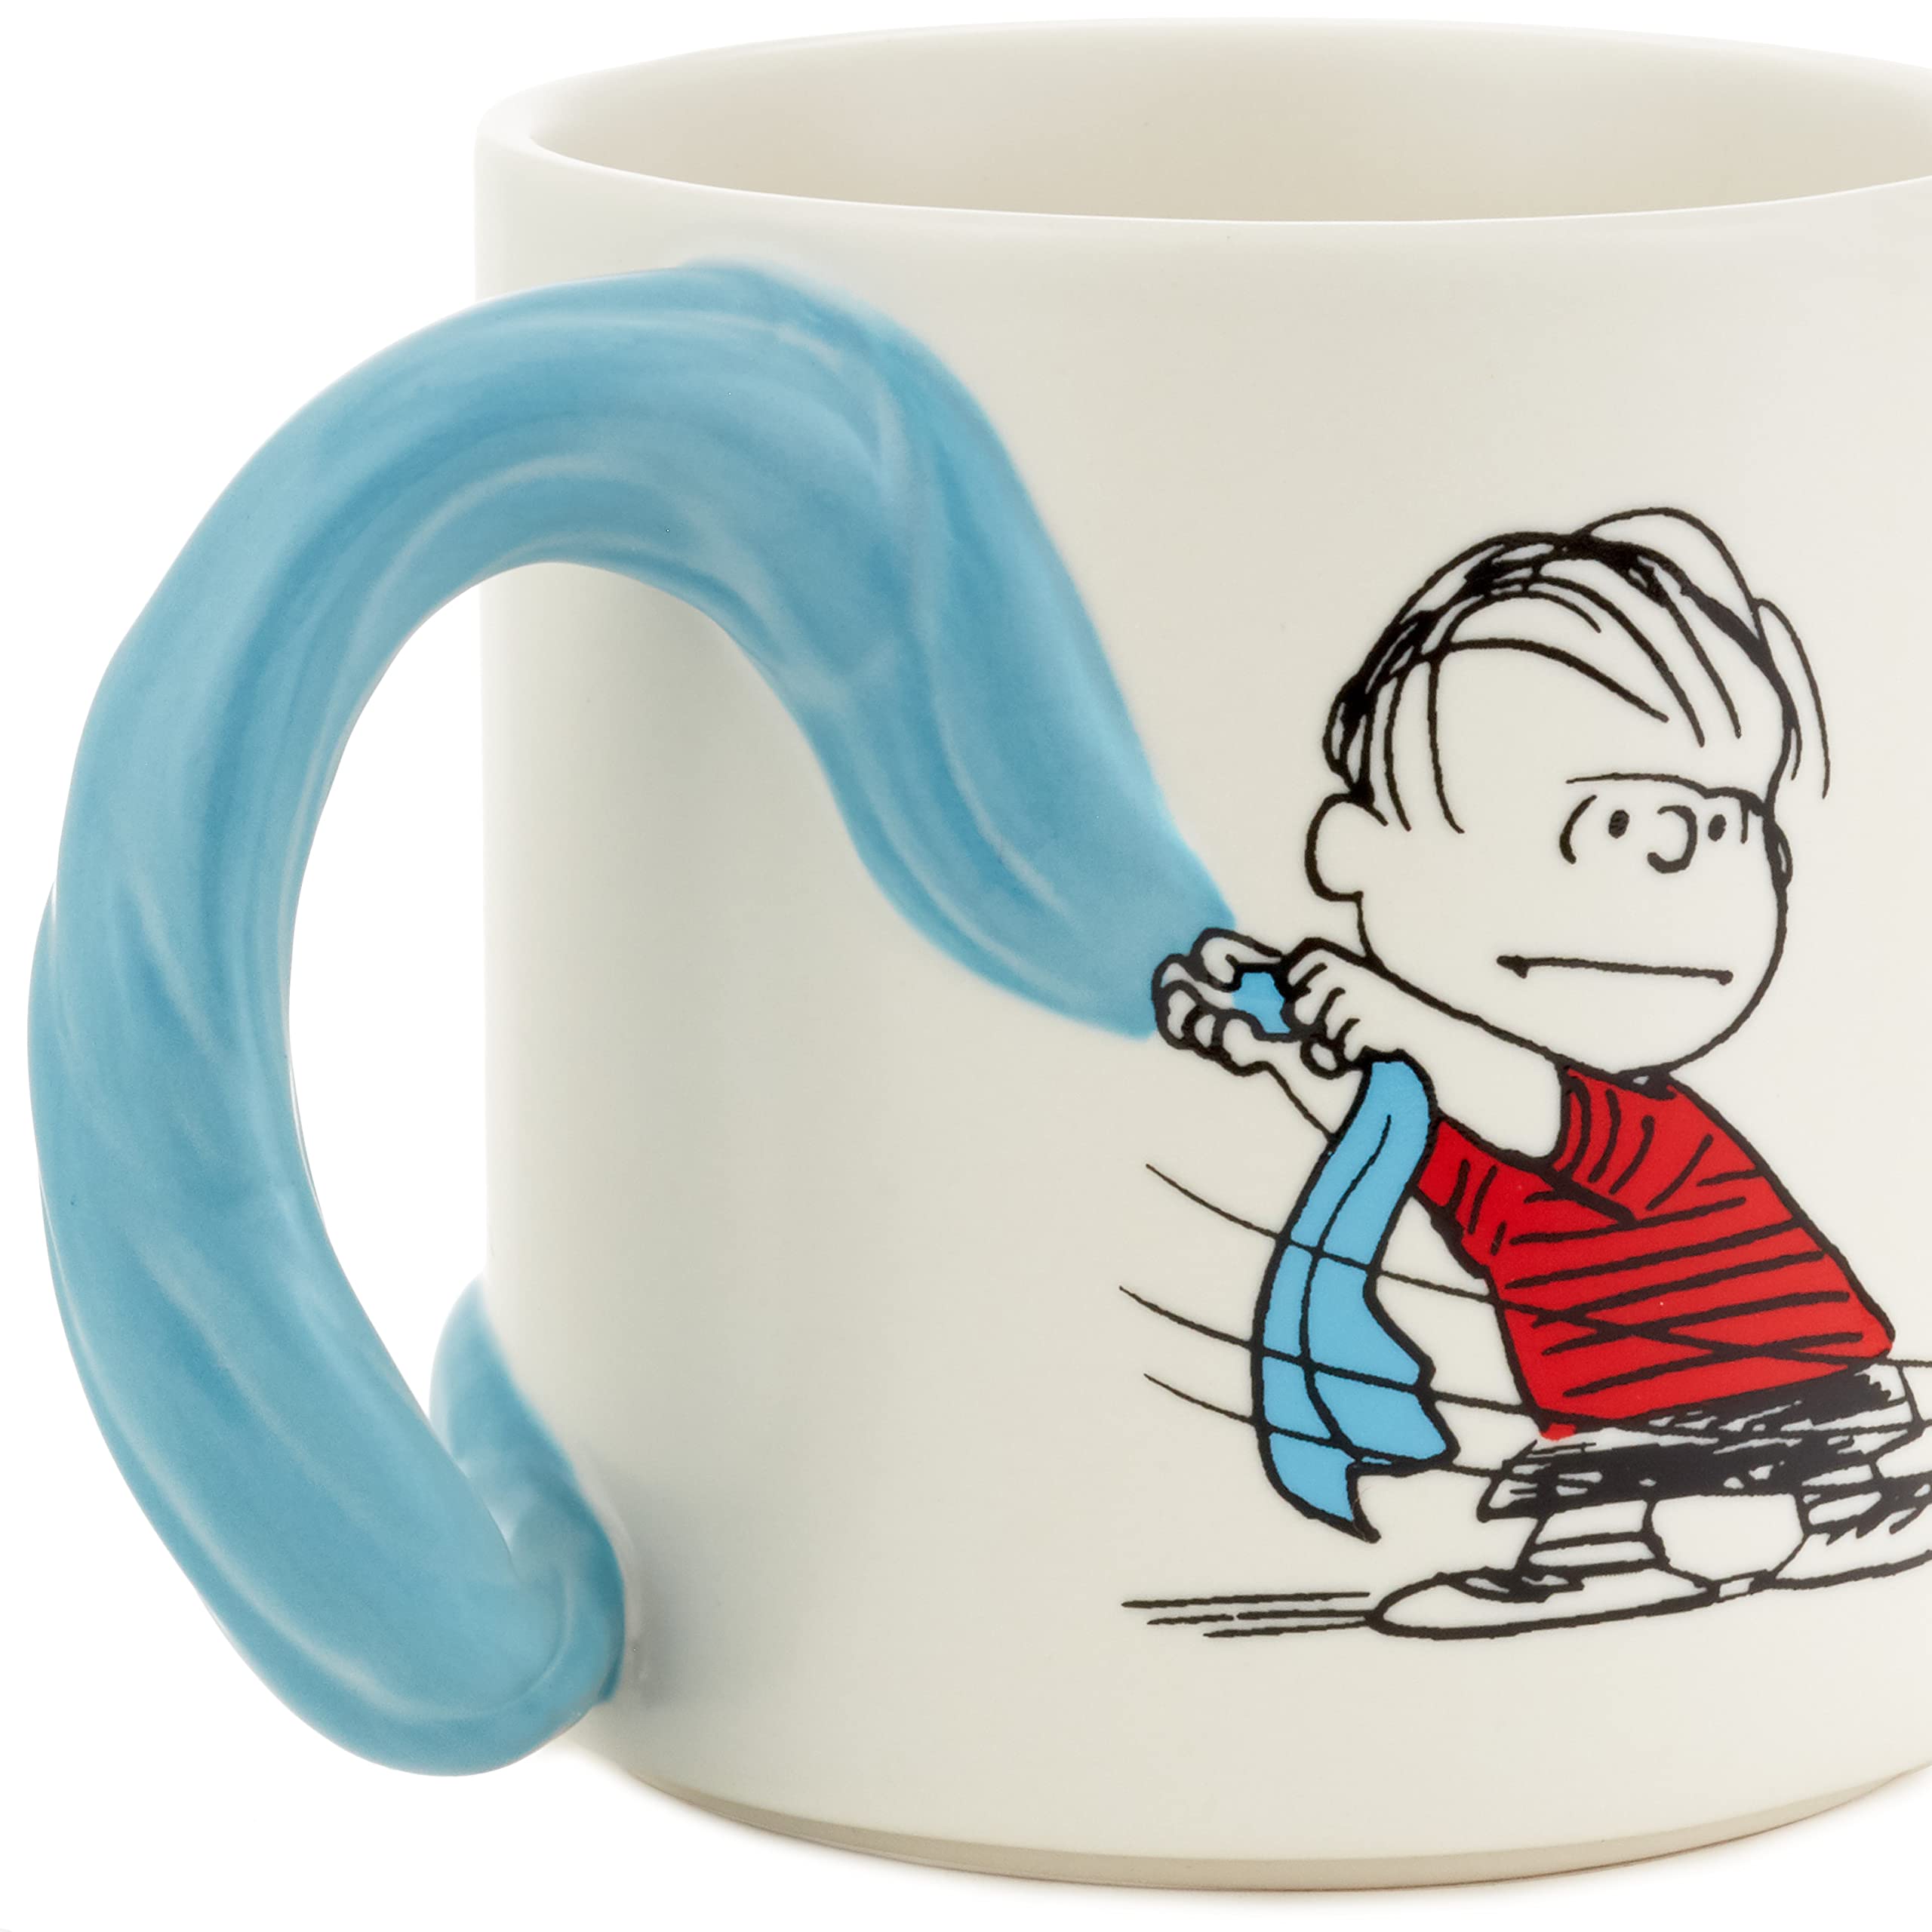 Hallmark Peanuts Linus and Snoopy Coffee Mug (Dimensional Blanket) 17 oz., Gifts for Moms, Dad, Teacher, Boss